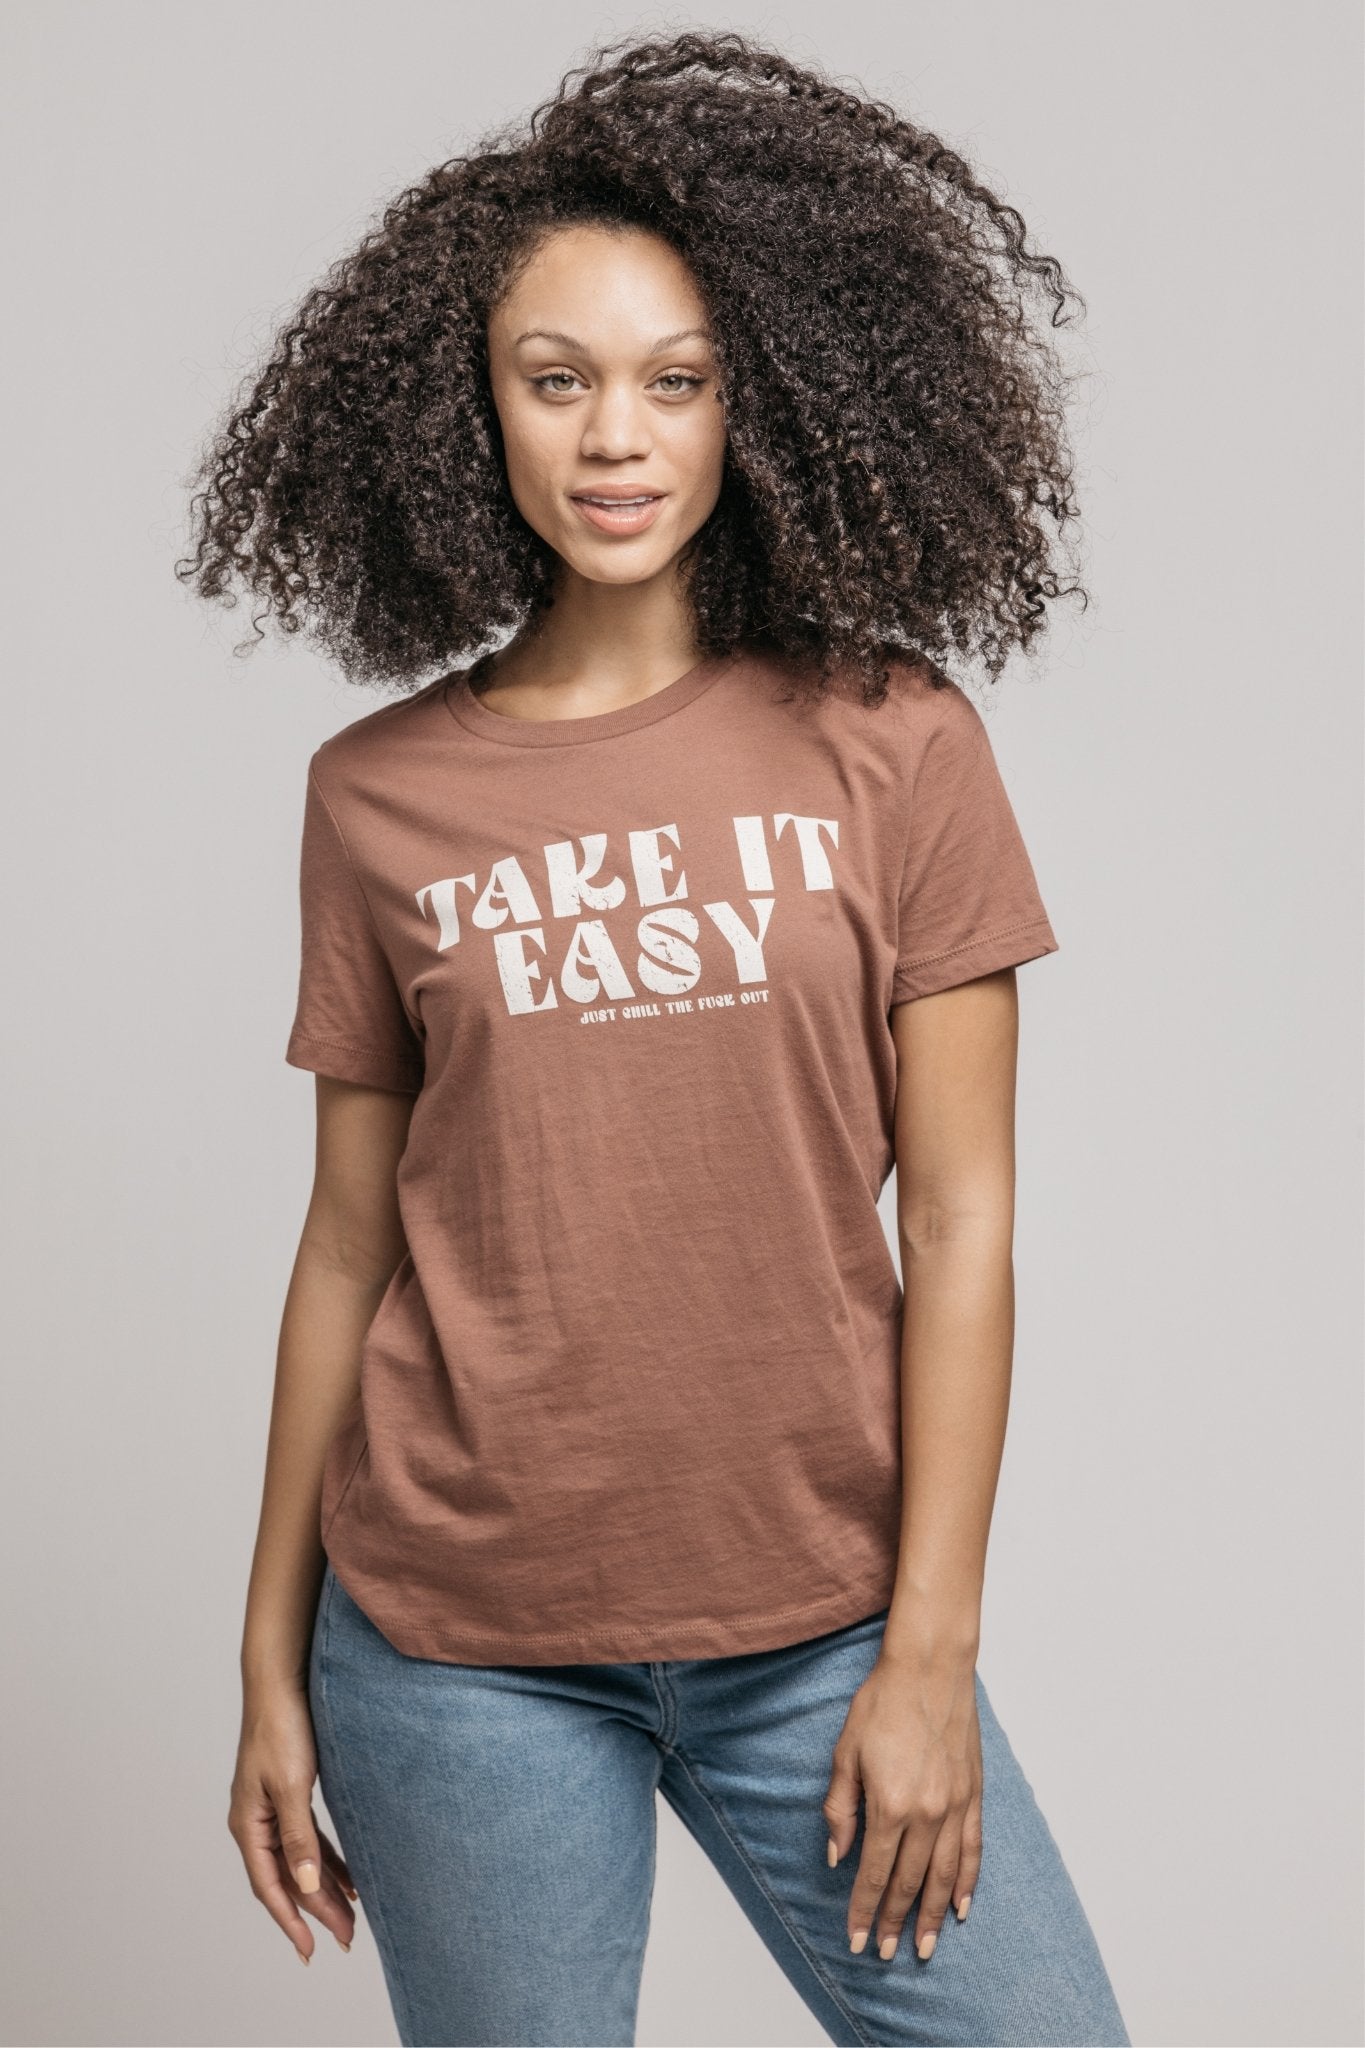 Take It Easy Tee - Shirts & Tops